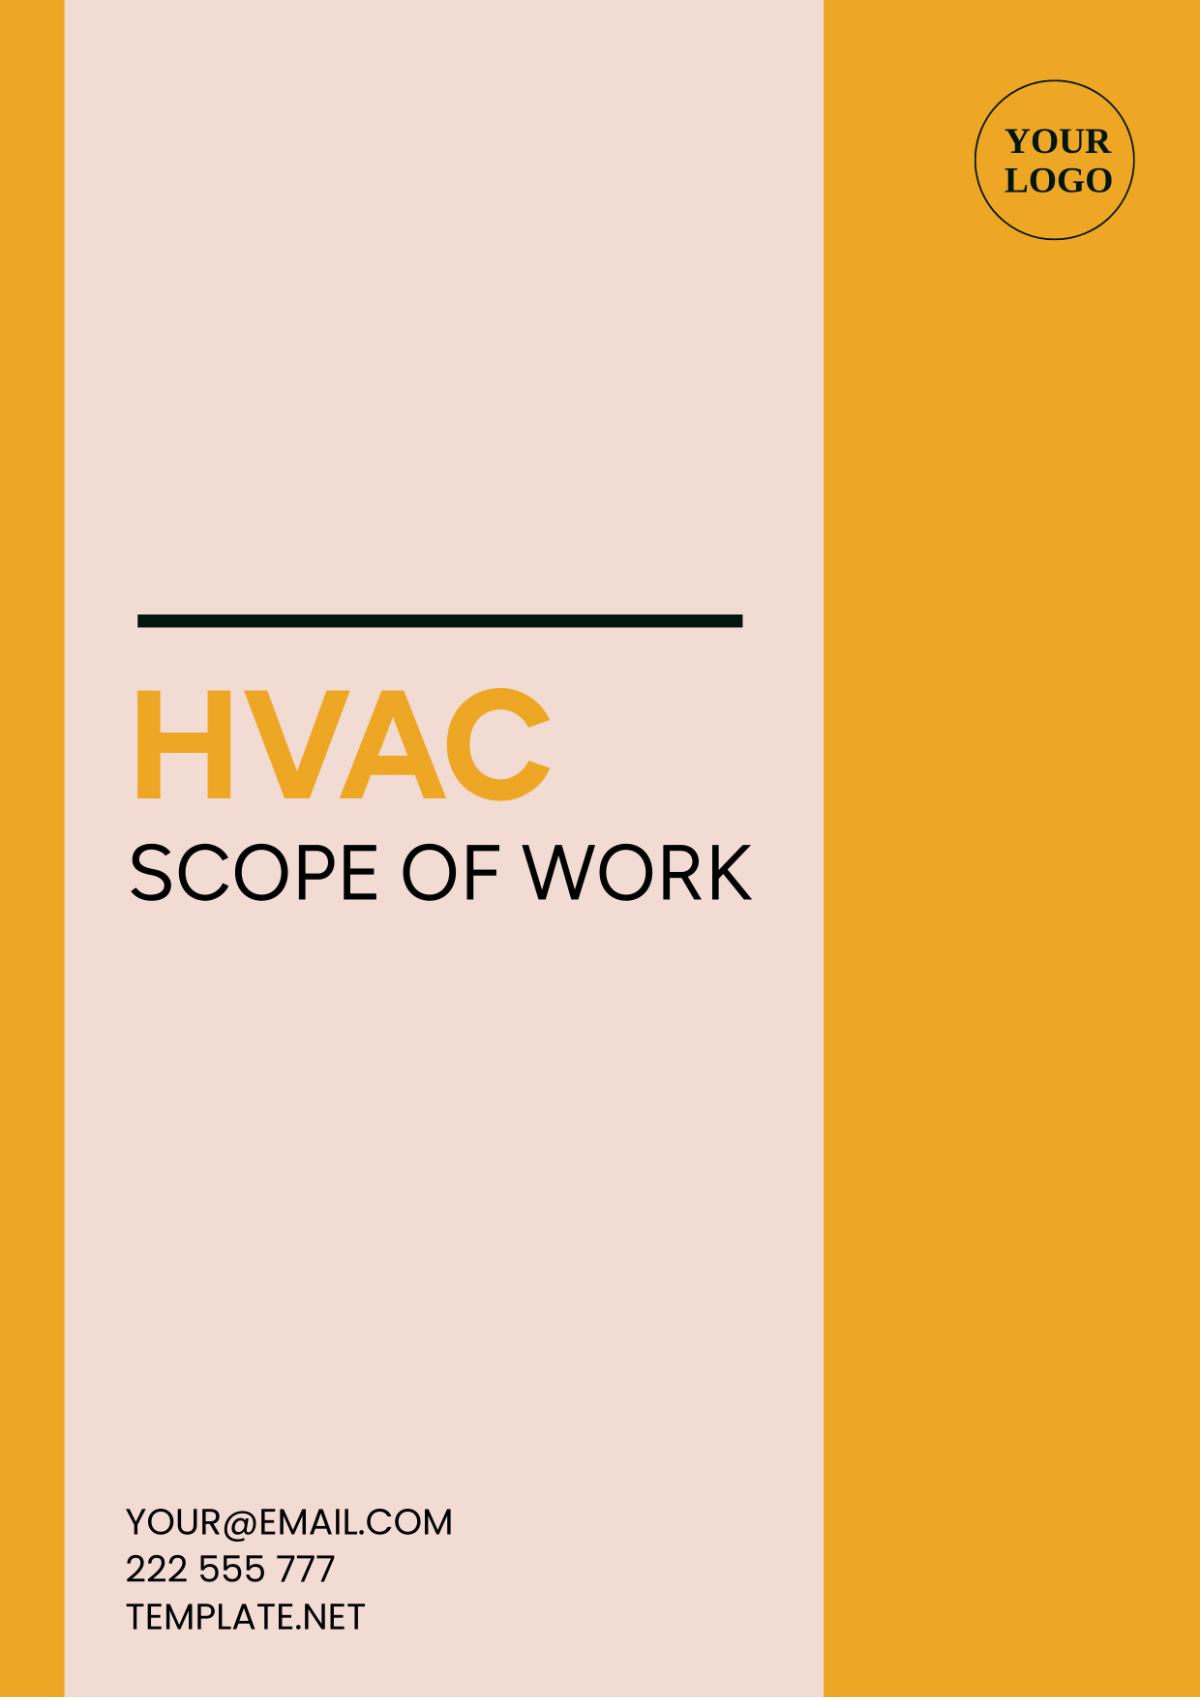 Hvac(Heat, Ventilation, Air, Conditioning) Scope Of Work Template